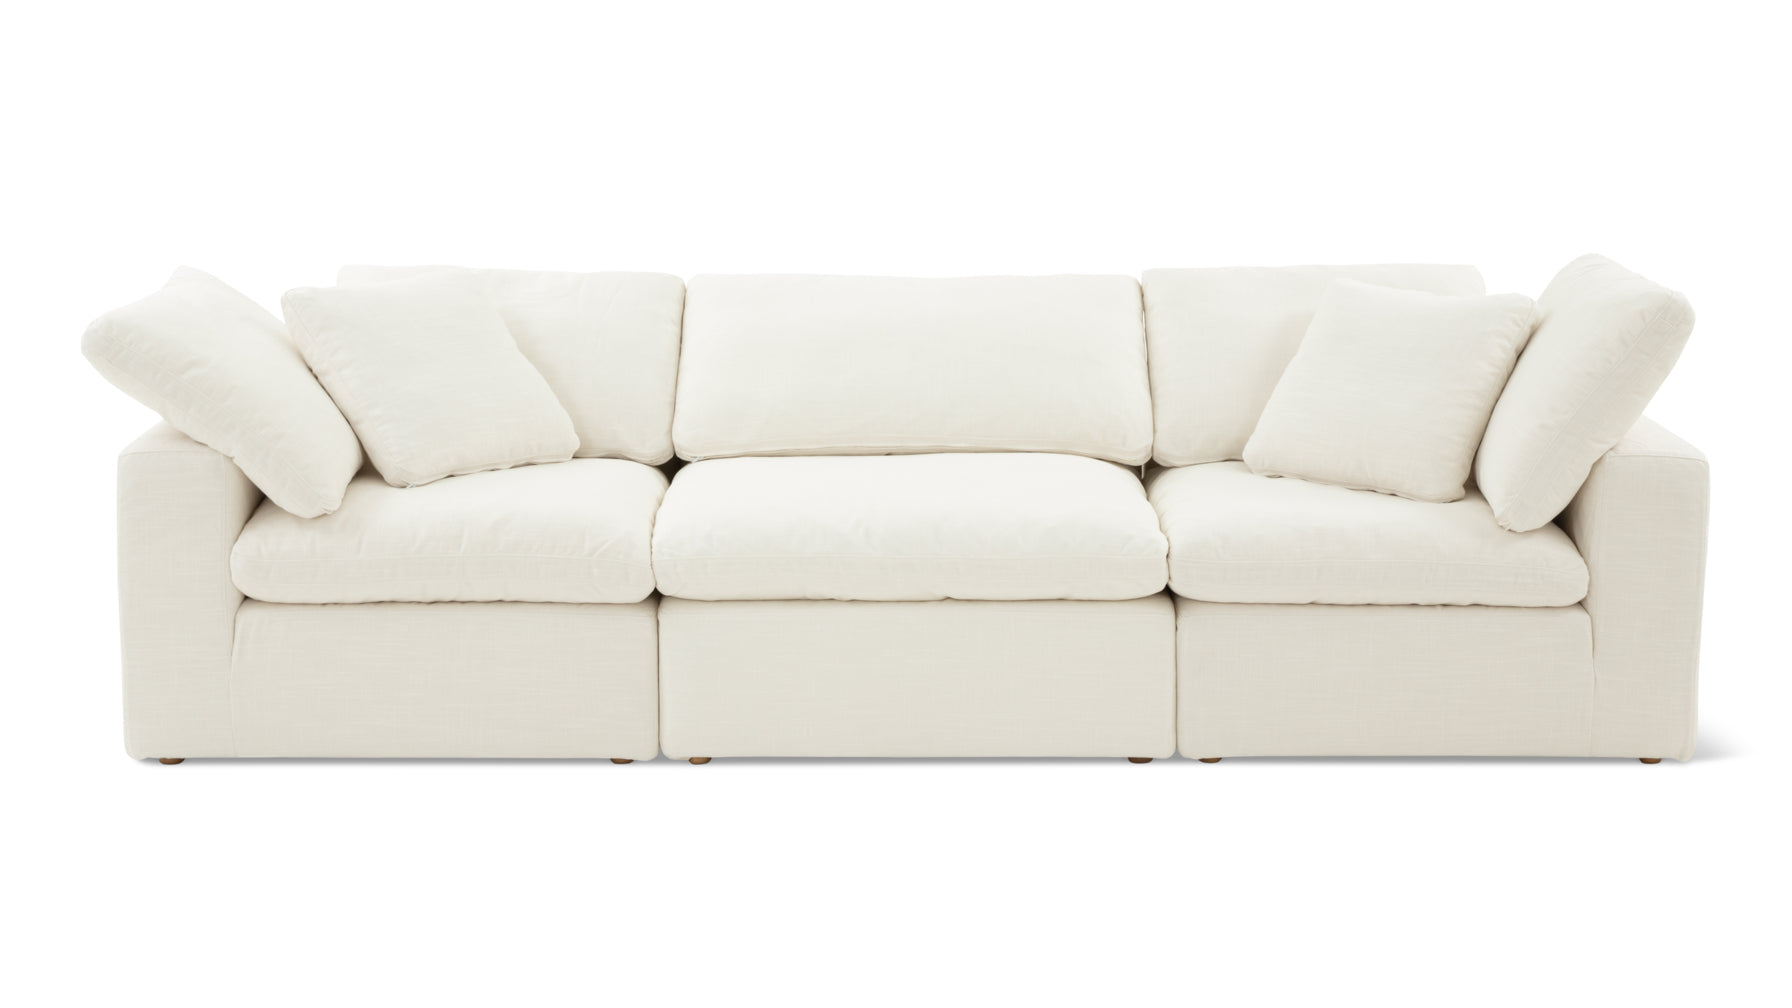 Movie Night™ 3-Piece Modular Sofa, Standard, Cream Linen - Image 1